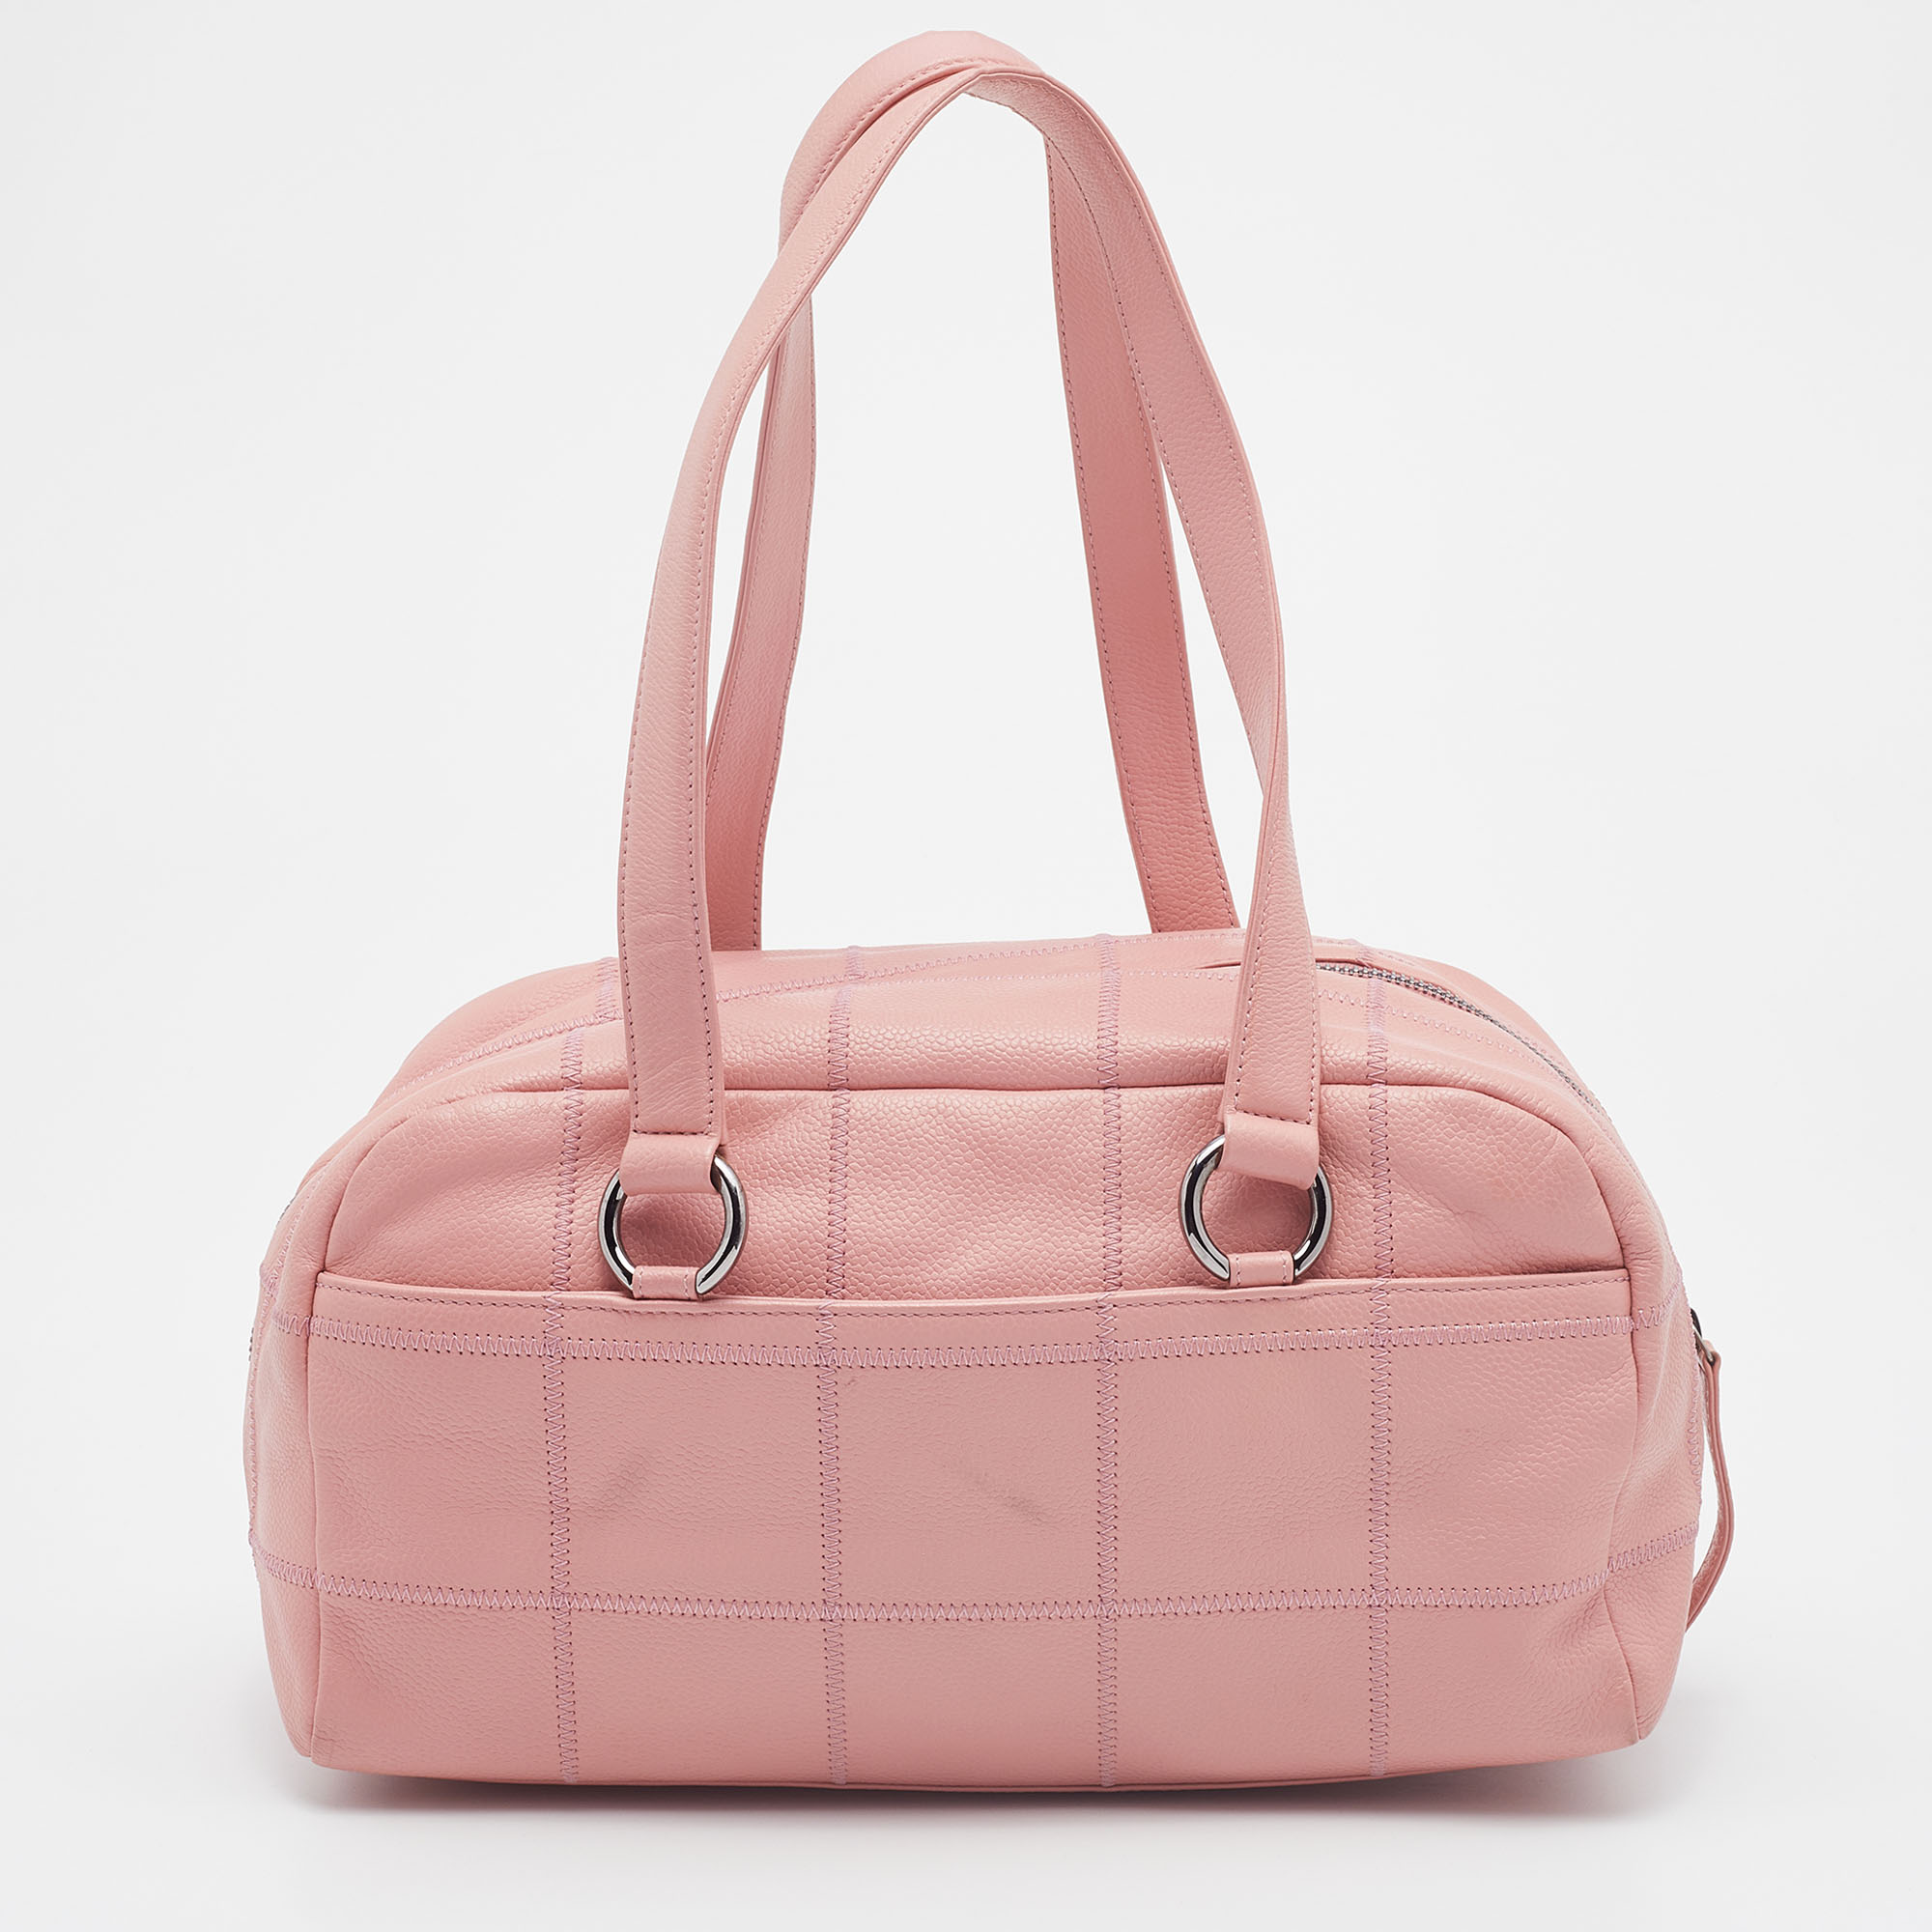 Chanel Bowler Bag FOR SALE! - PicClick